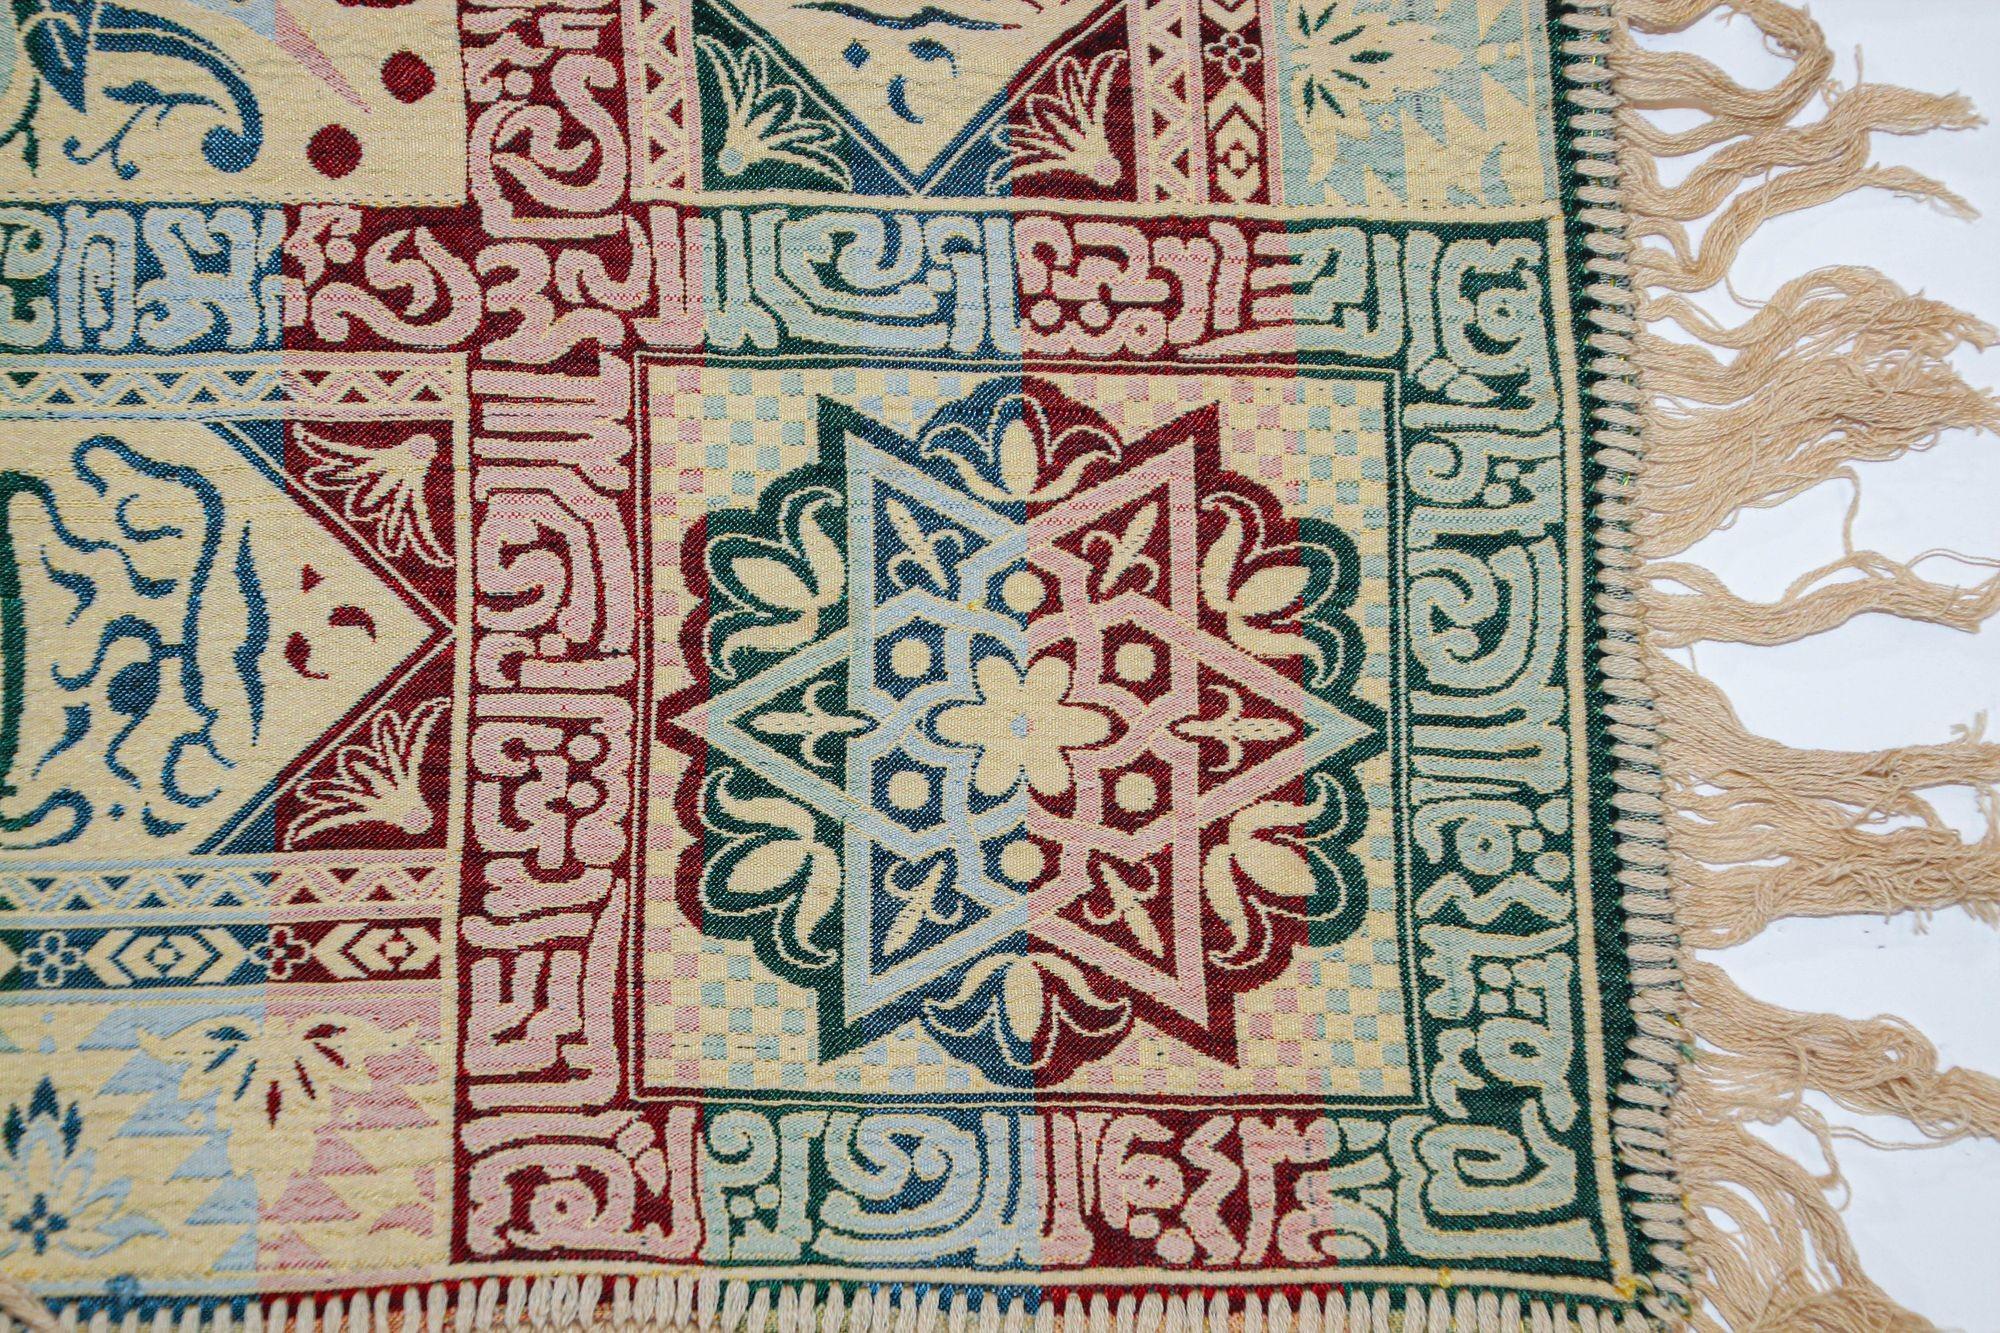 1920s Antique Granada Spain Moorish Islamic Tapestry with Arabic Writing 7